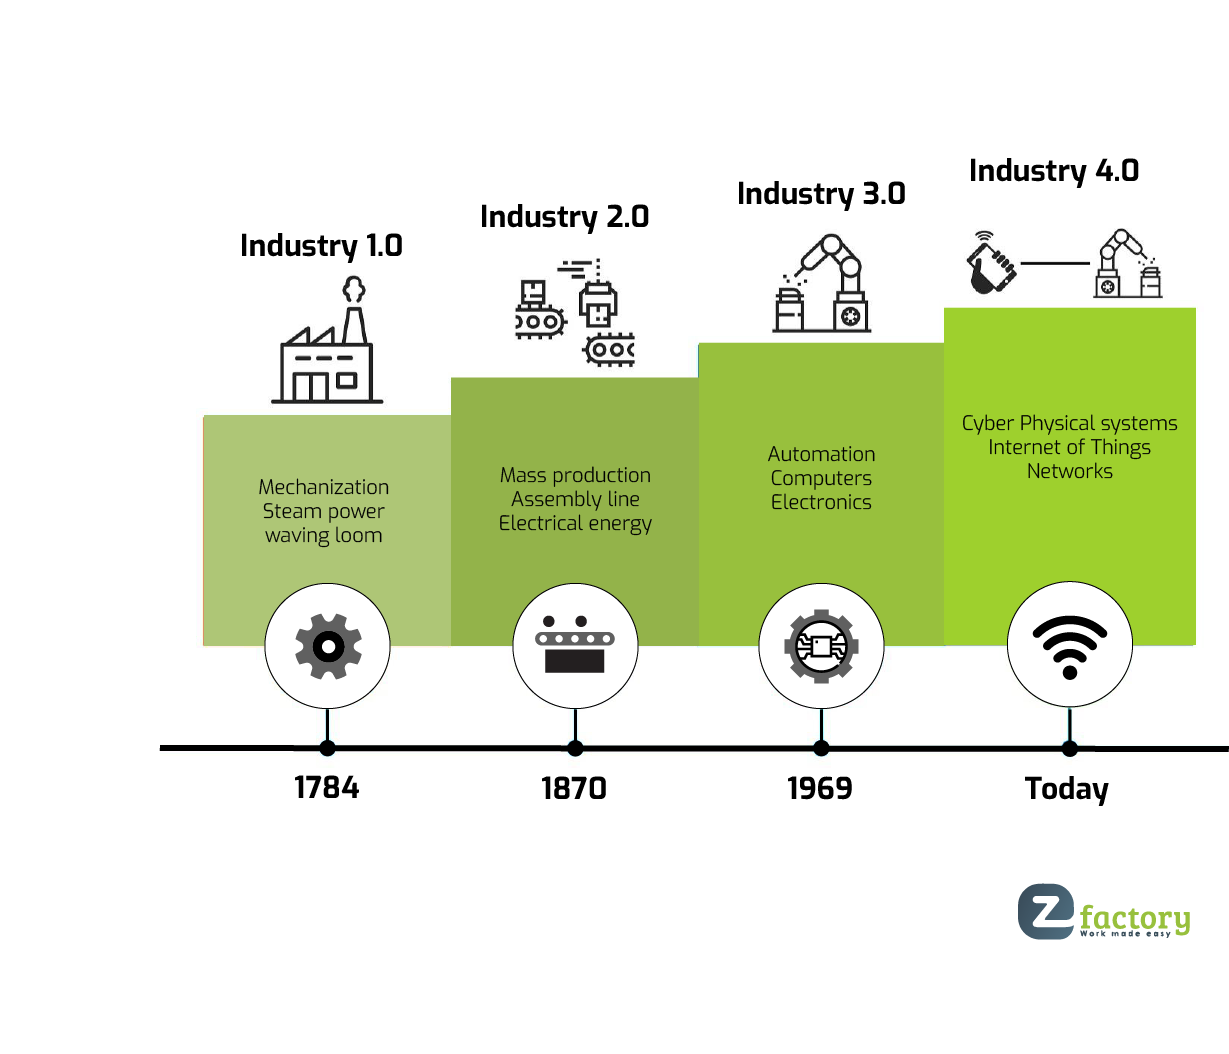 wat is industry 4.0